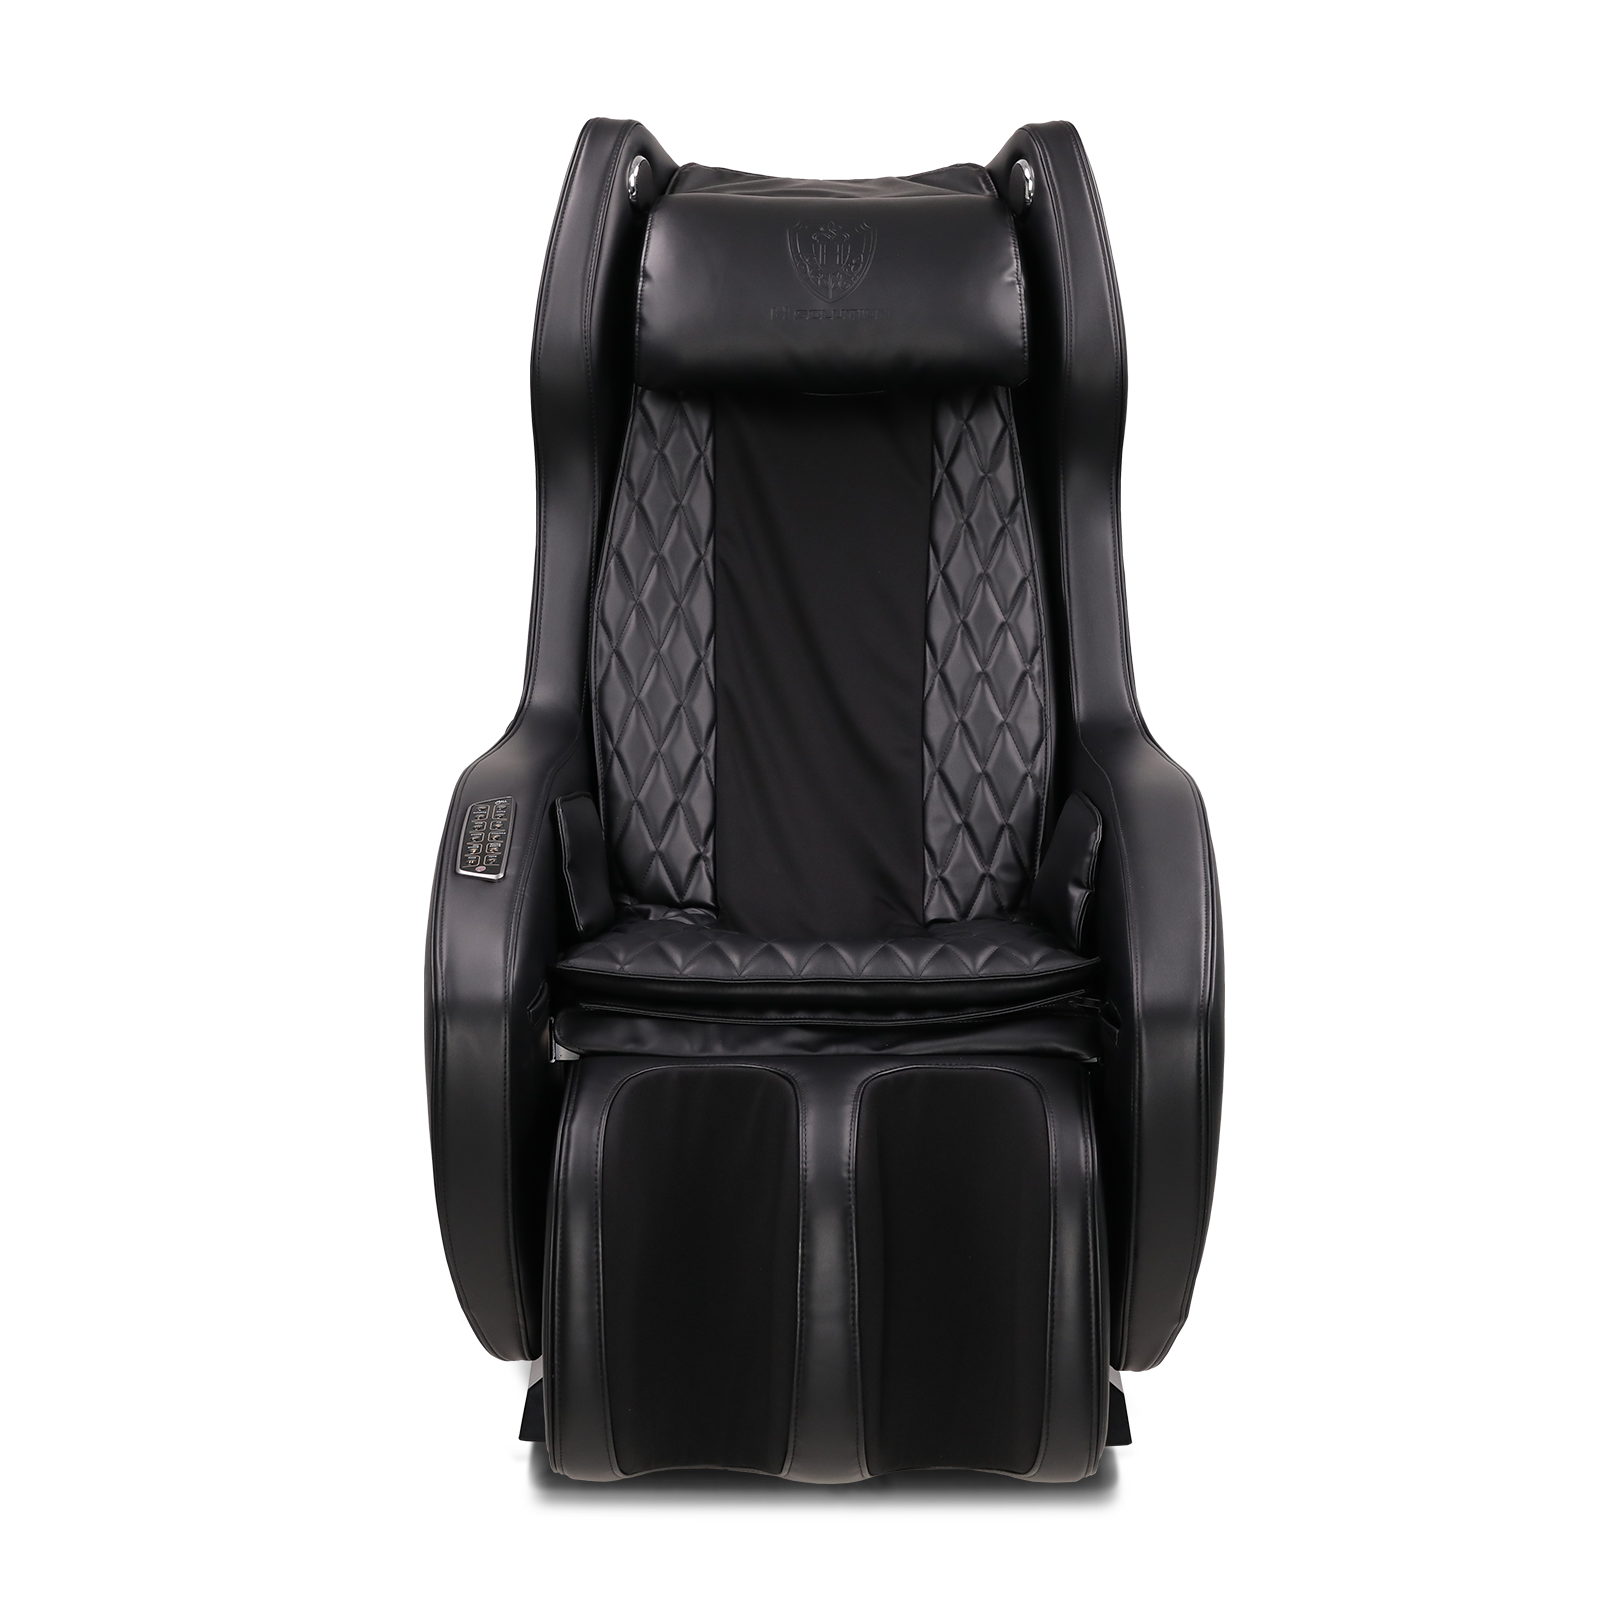 H Solution Tini Massage Chair (Black)